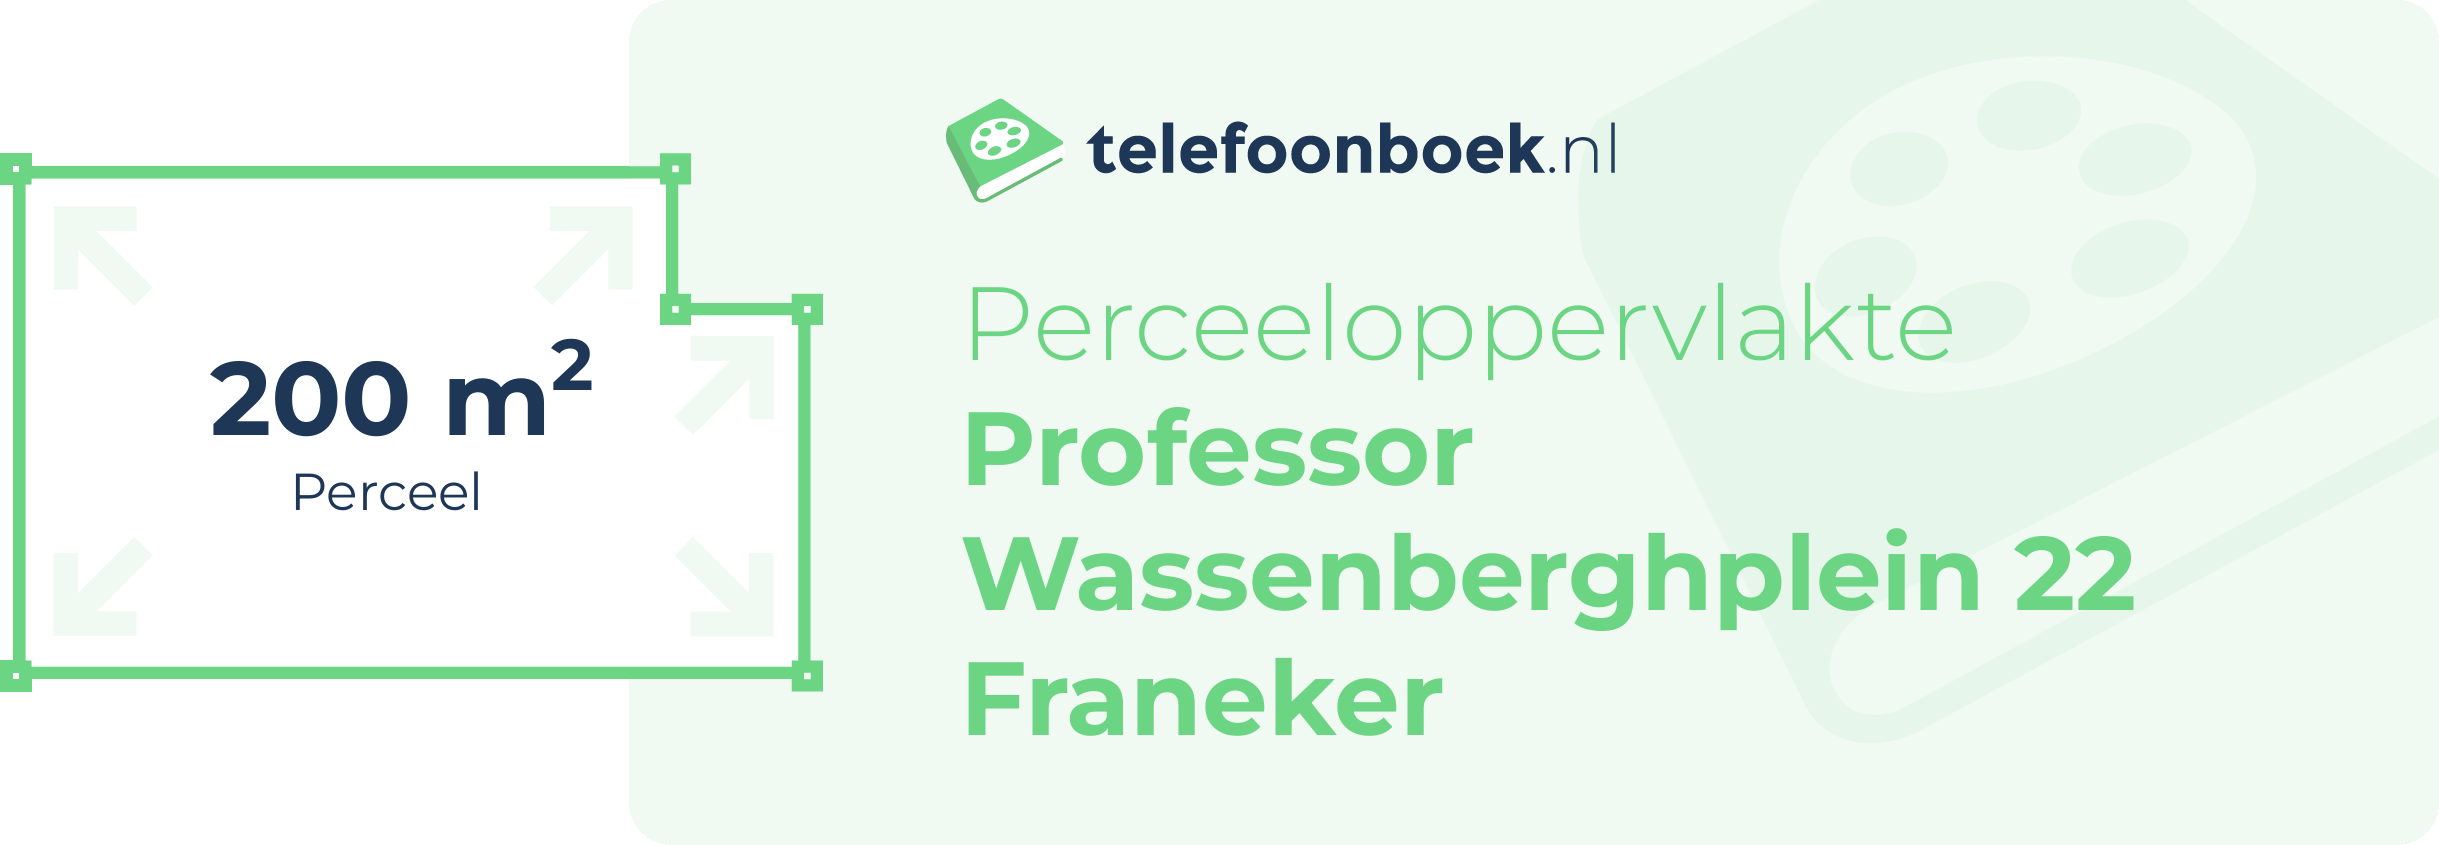 Perceeloppervlakte Professor Wassenberghplein 22 Franeker